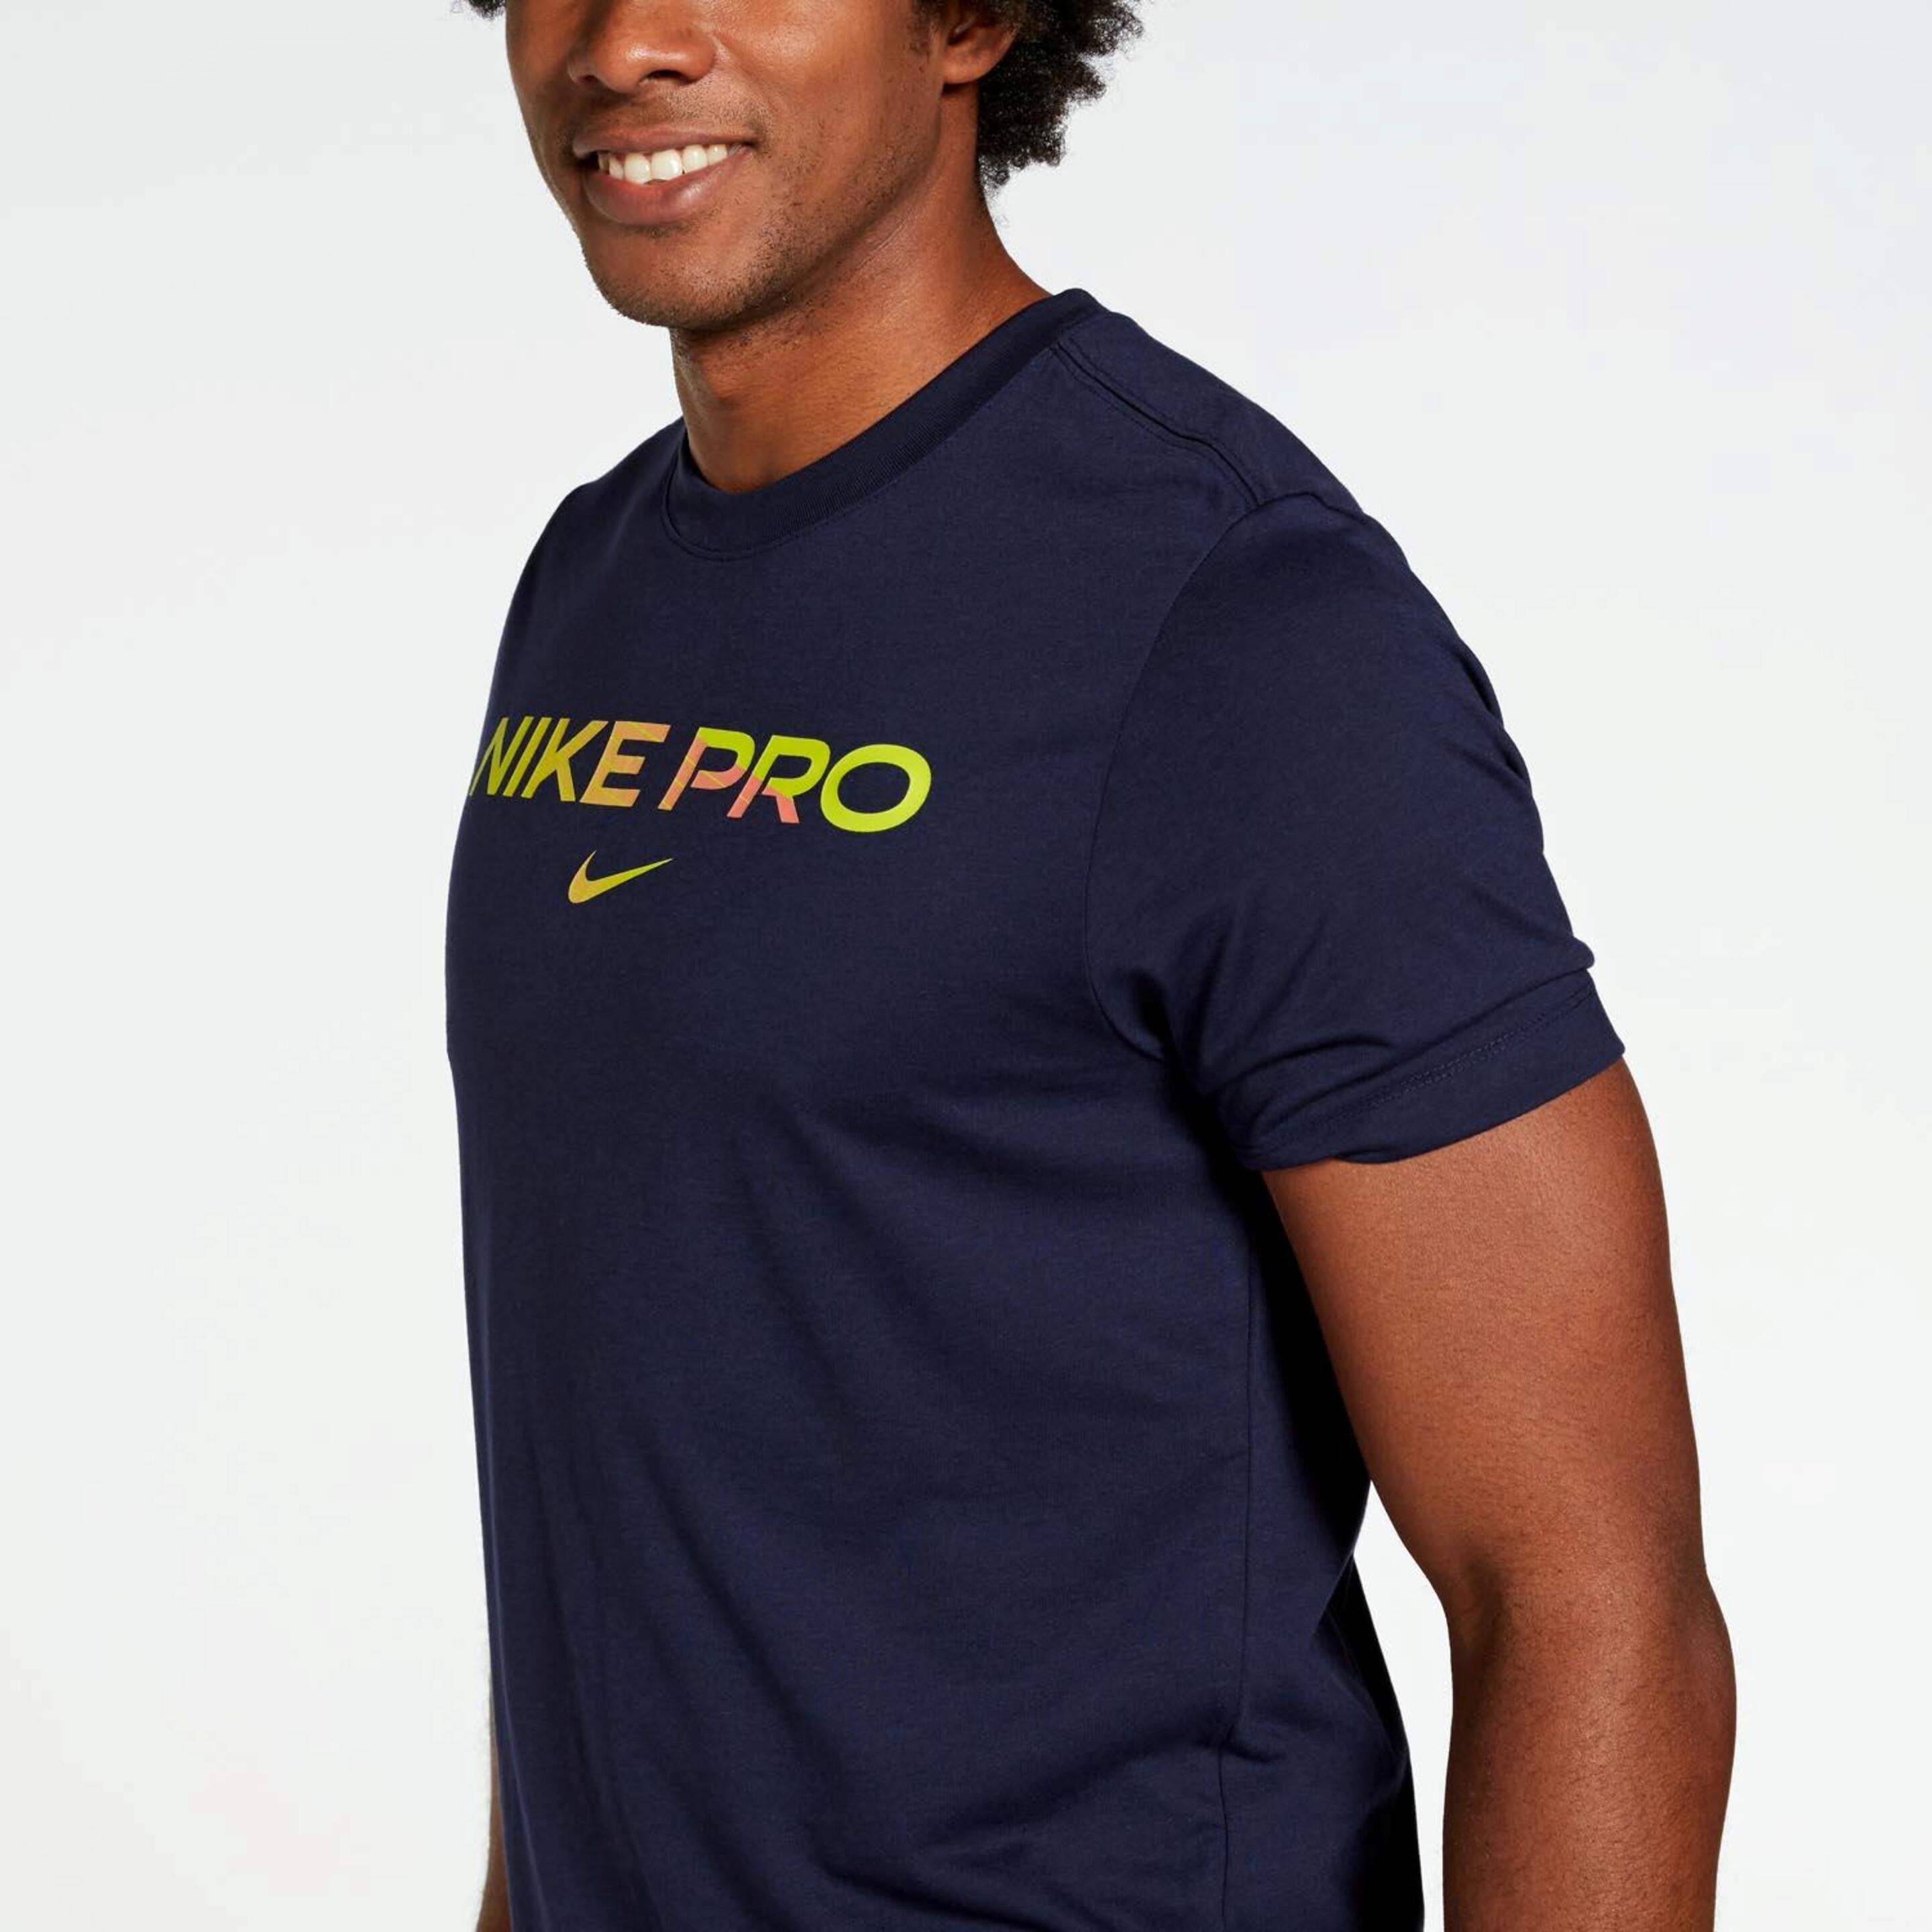 T-shirt Nike Db